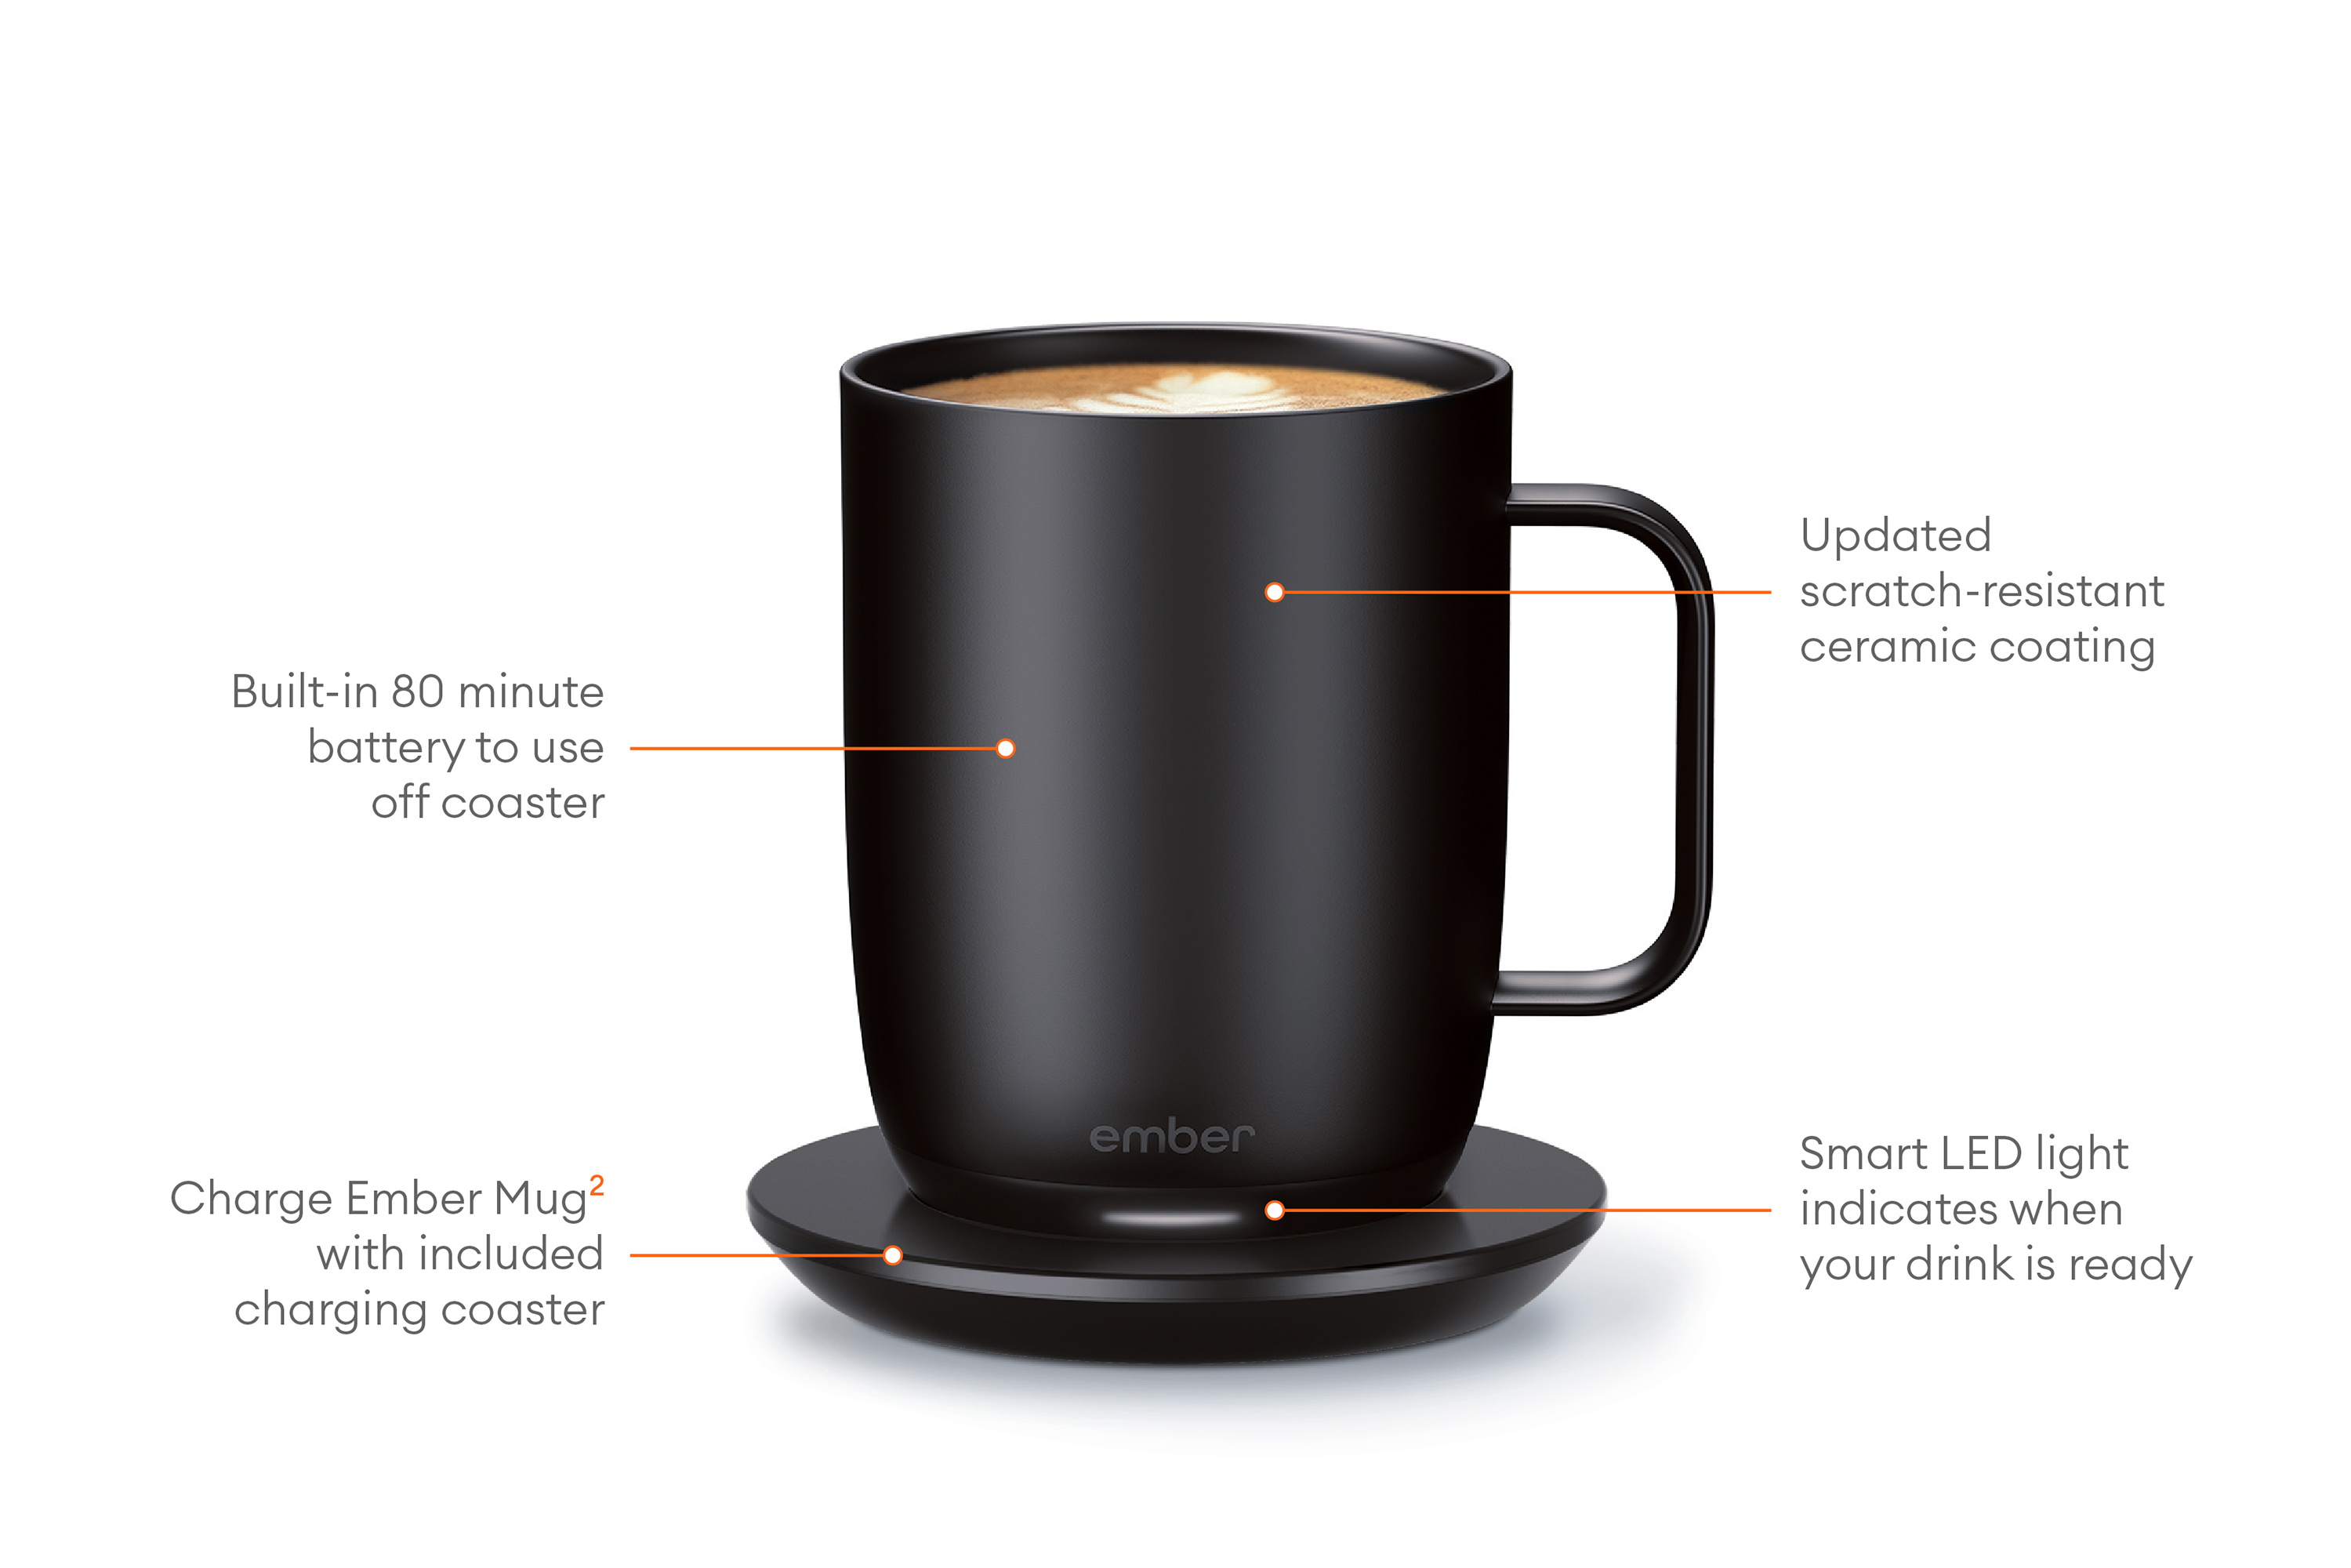 Ember Temperature Control Smart Mug 2, 14 oz, Black, Up To 1.5-hr Battery Life - App Controlled Heated Coffee/Tea Mug - Improved Design - image 4 of 6